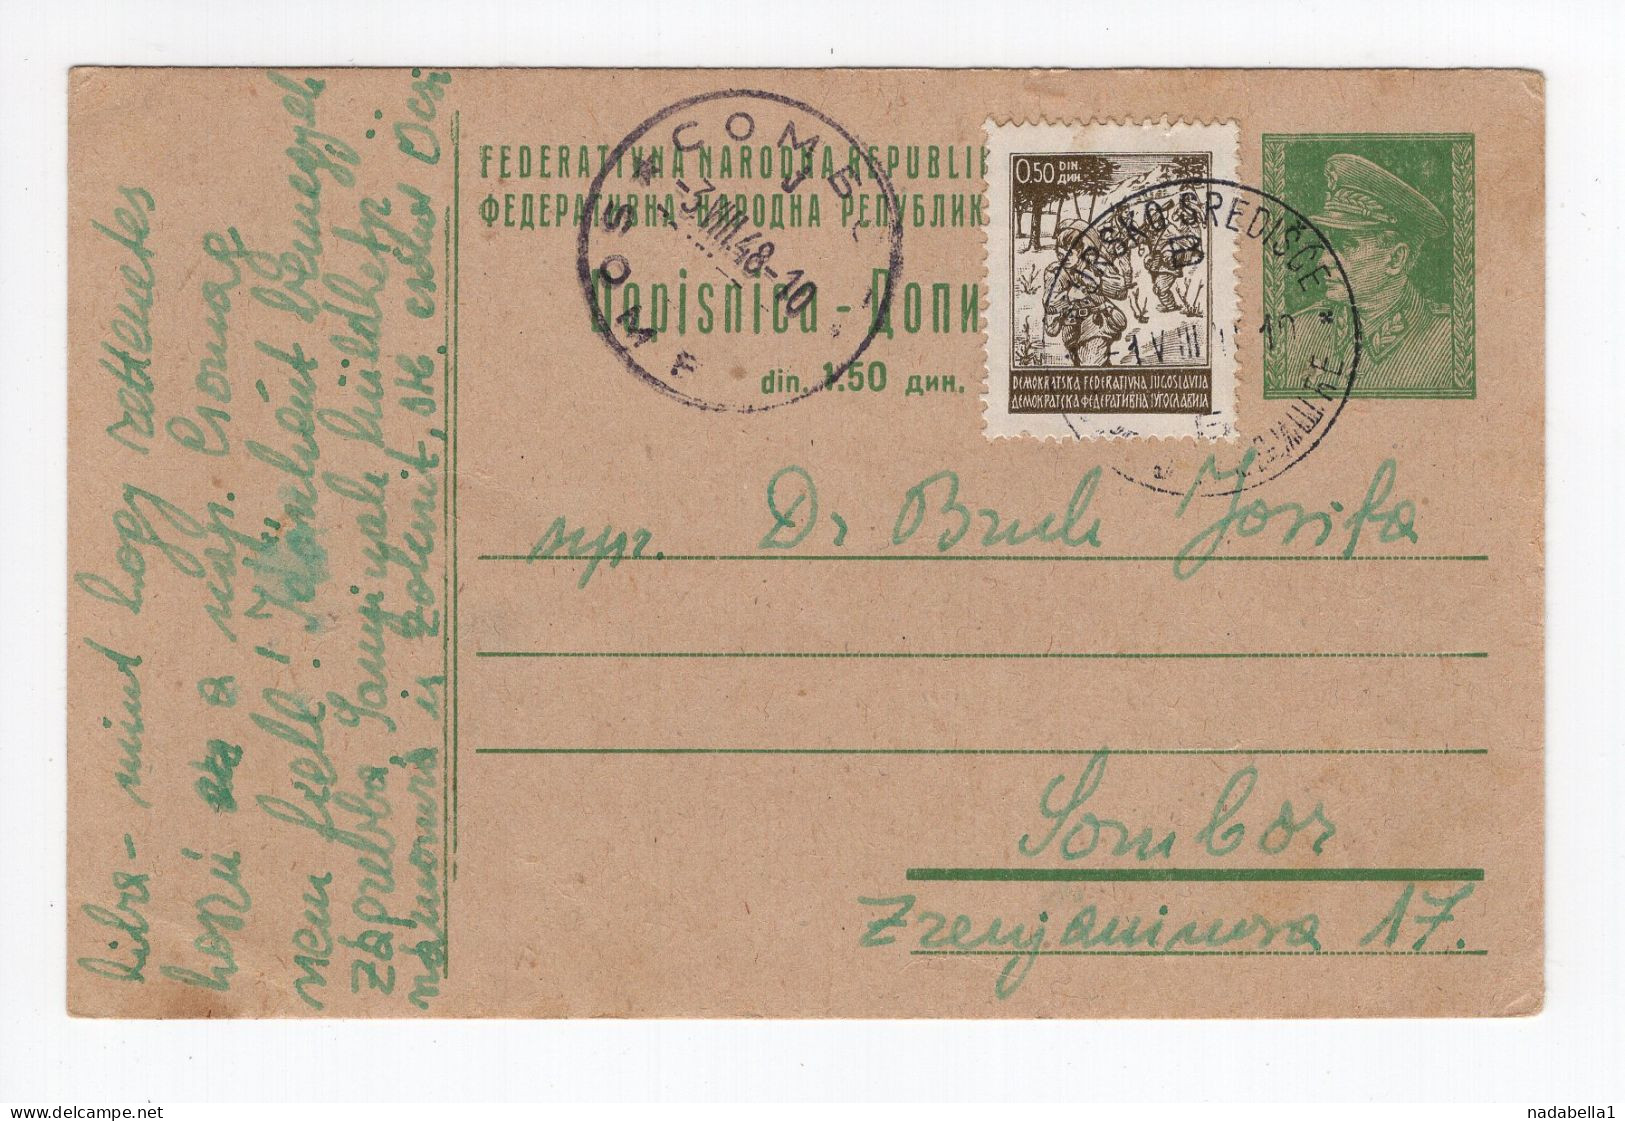 1948. YUGOSLAVIA,CROATIA,MURSKO SREDISCE POSTMARK,STATIONERY CARD,USED TO SOMBOR - Entiers Postaux